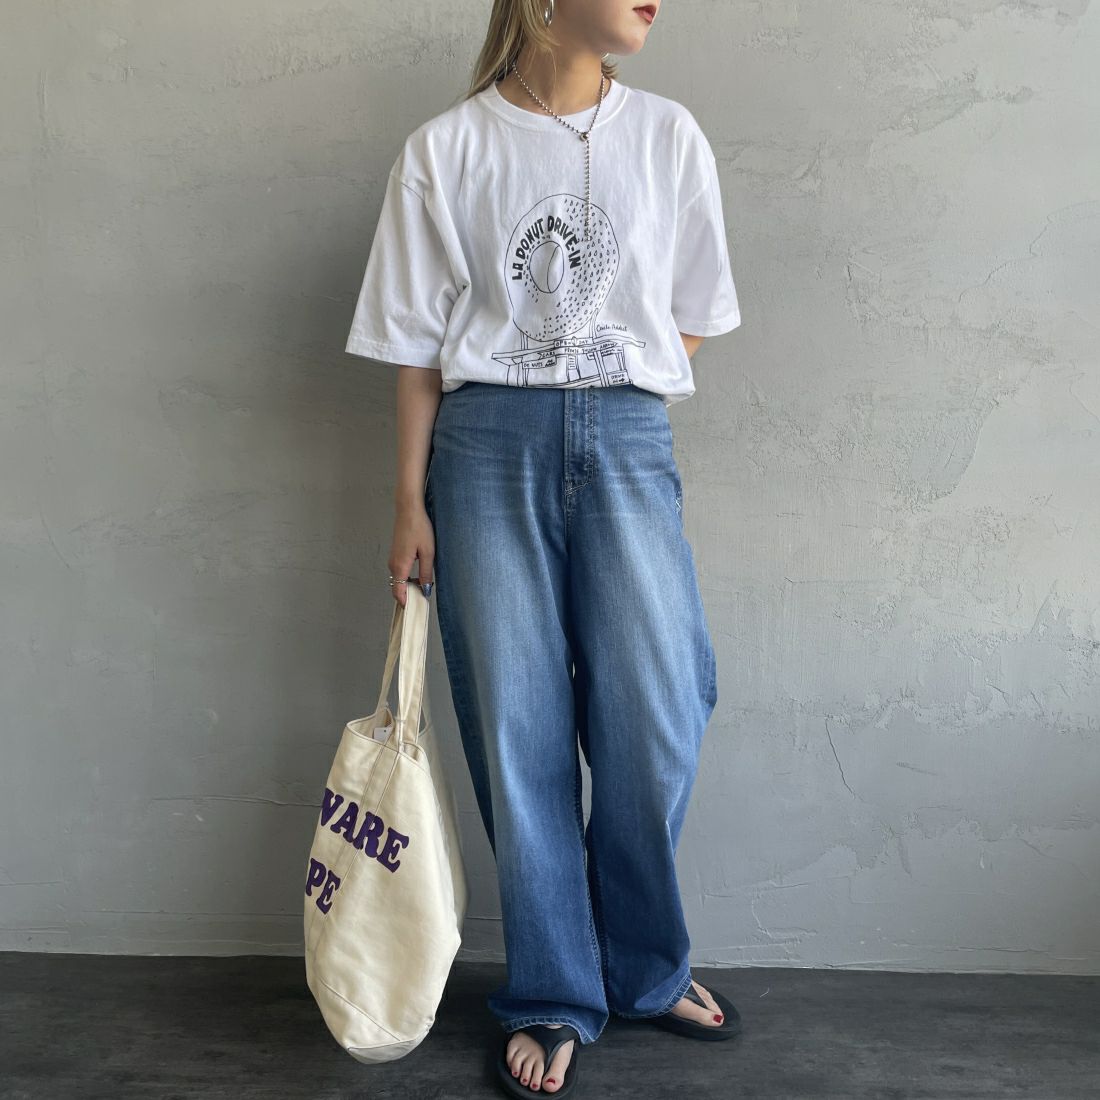 FUNG [ファング] LA.DONUT カットオフプリントTシャツ [LADONUT-FRONT] WHITE